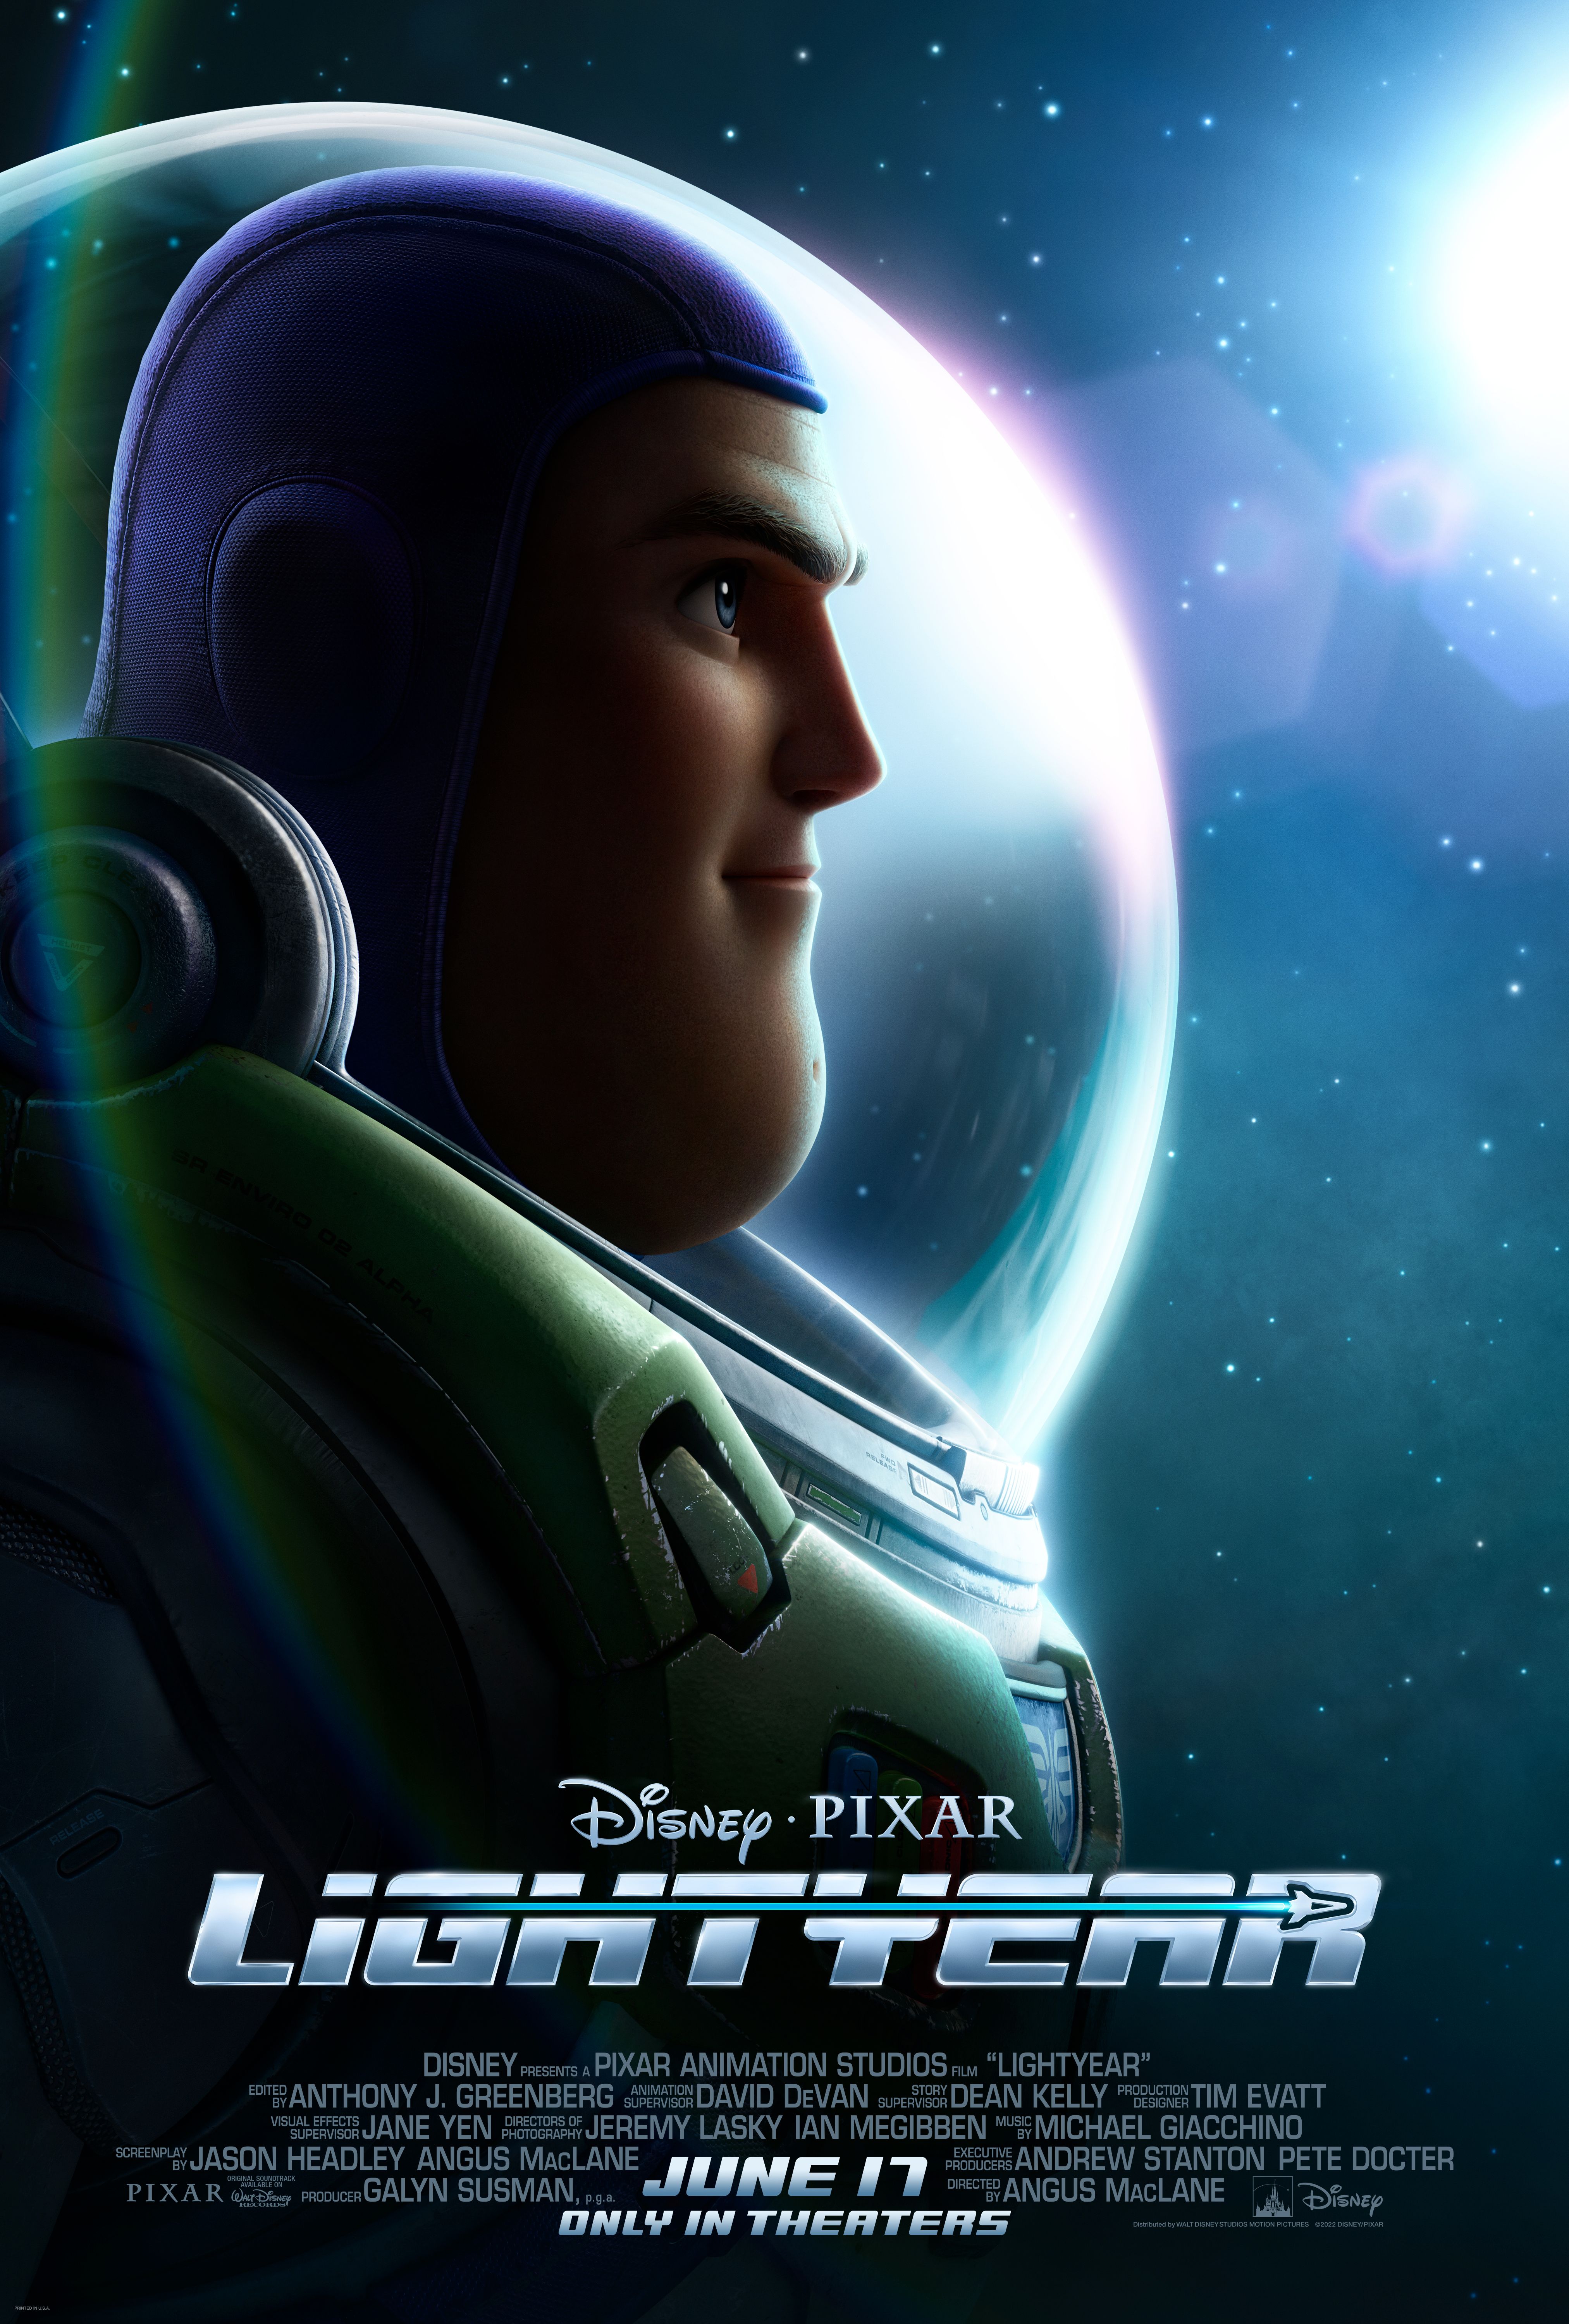 Lightyear second official poster.jpg